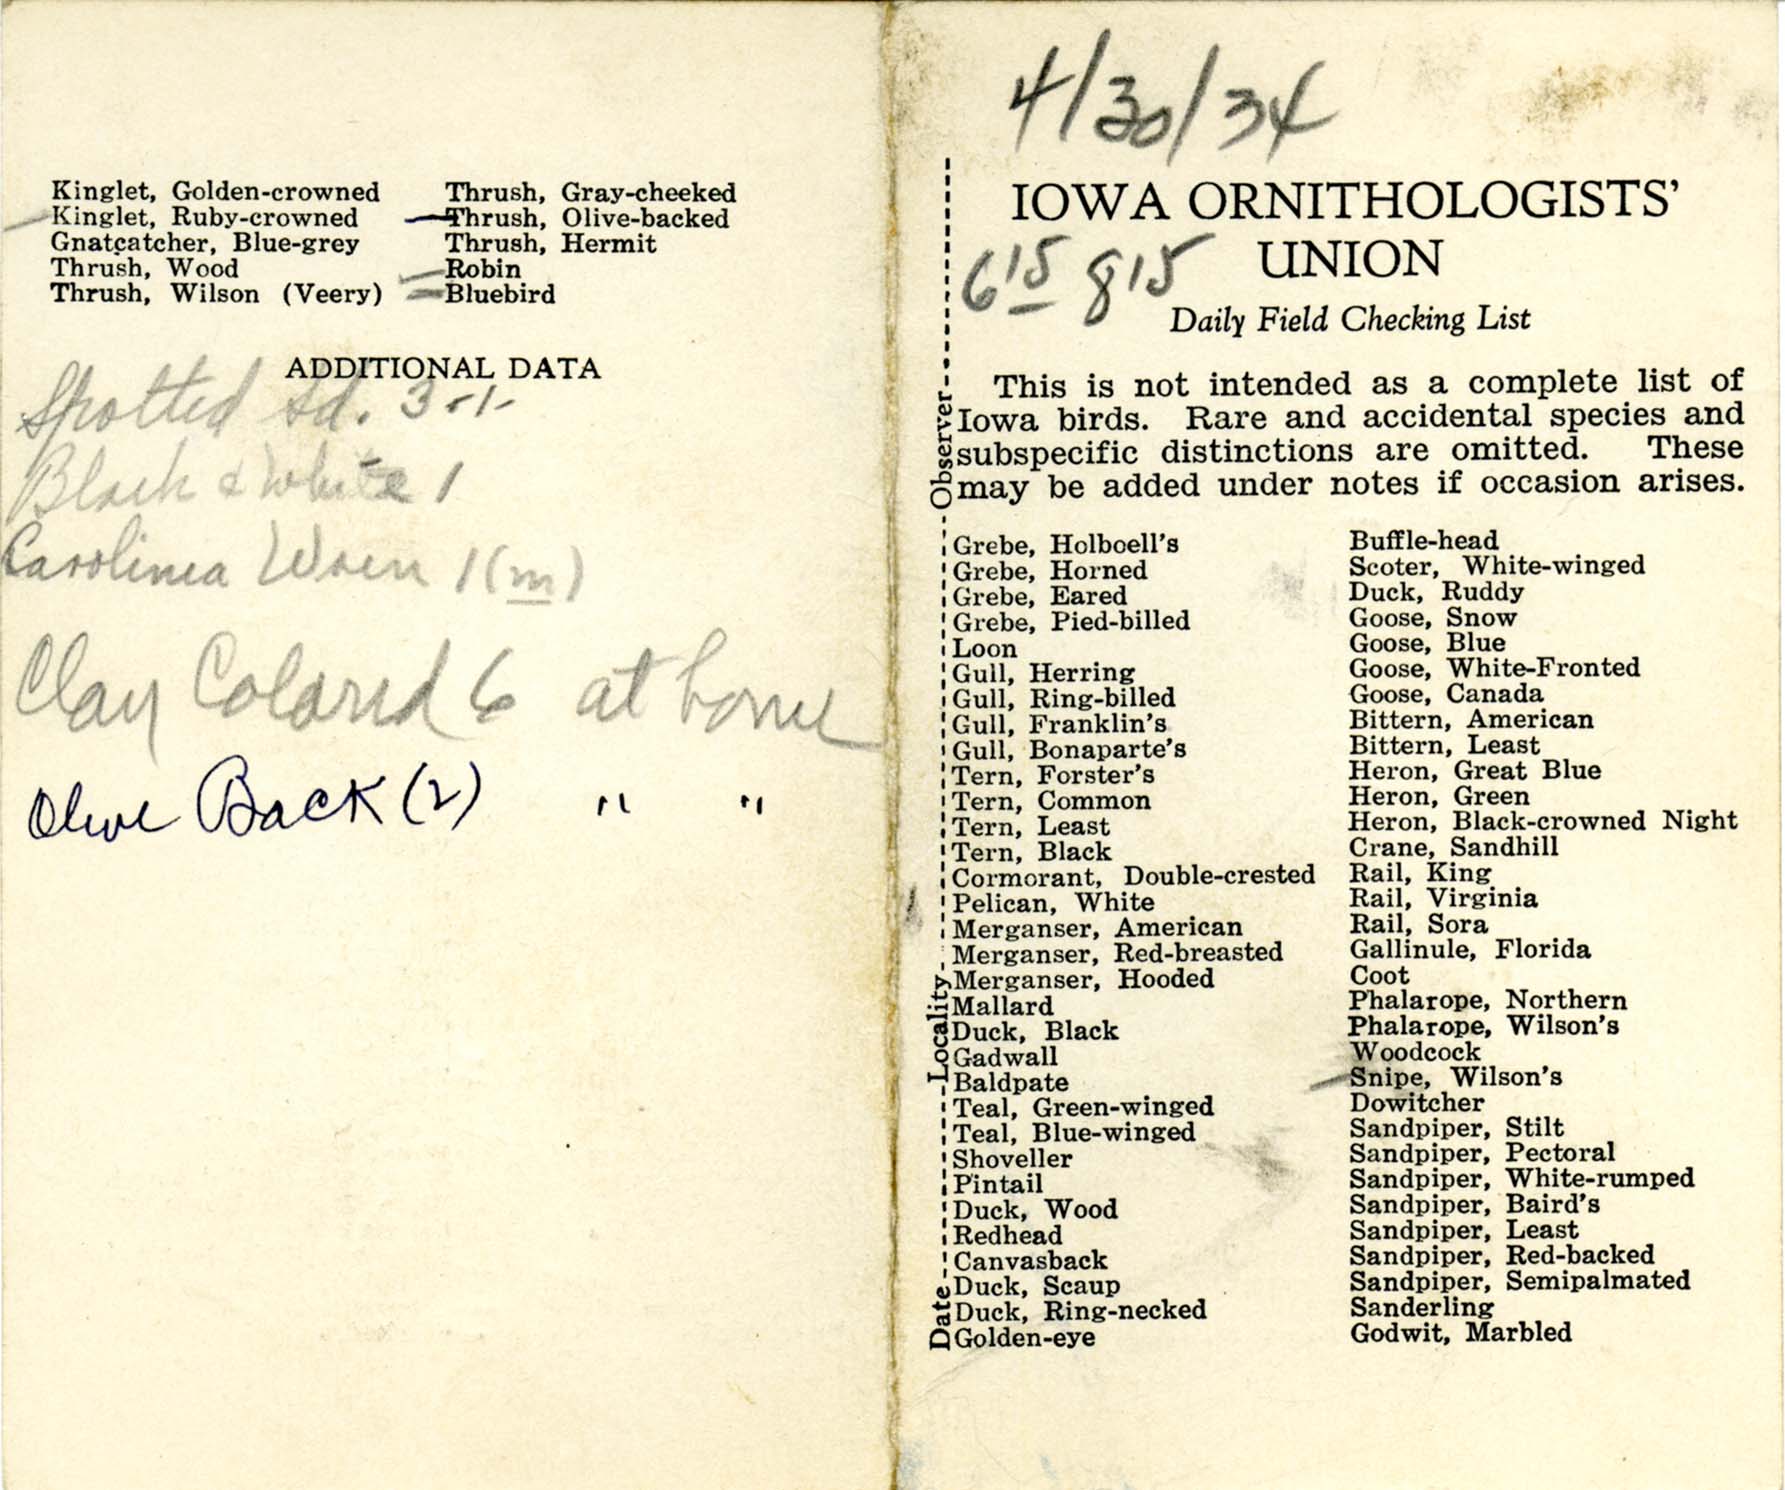 Daily field checking list, Walter Rosene, April 30, 1934